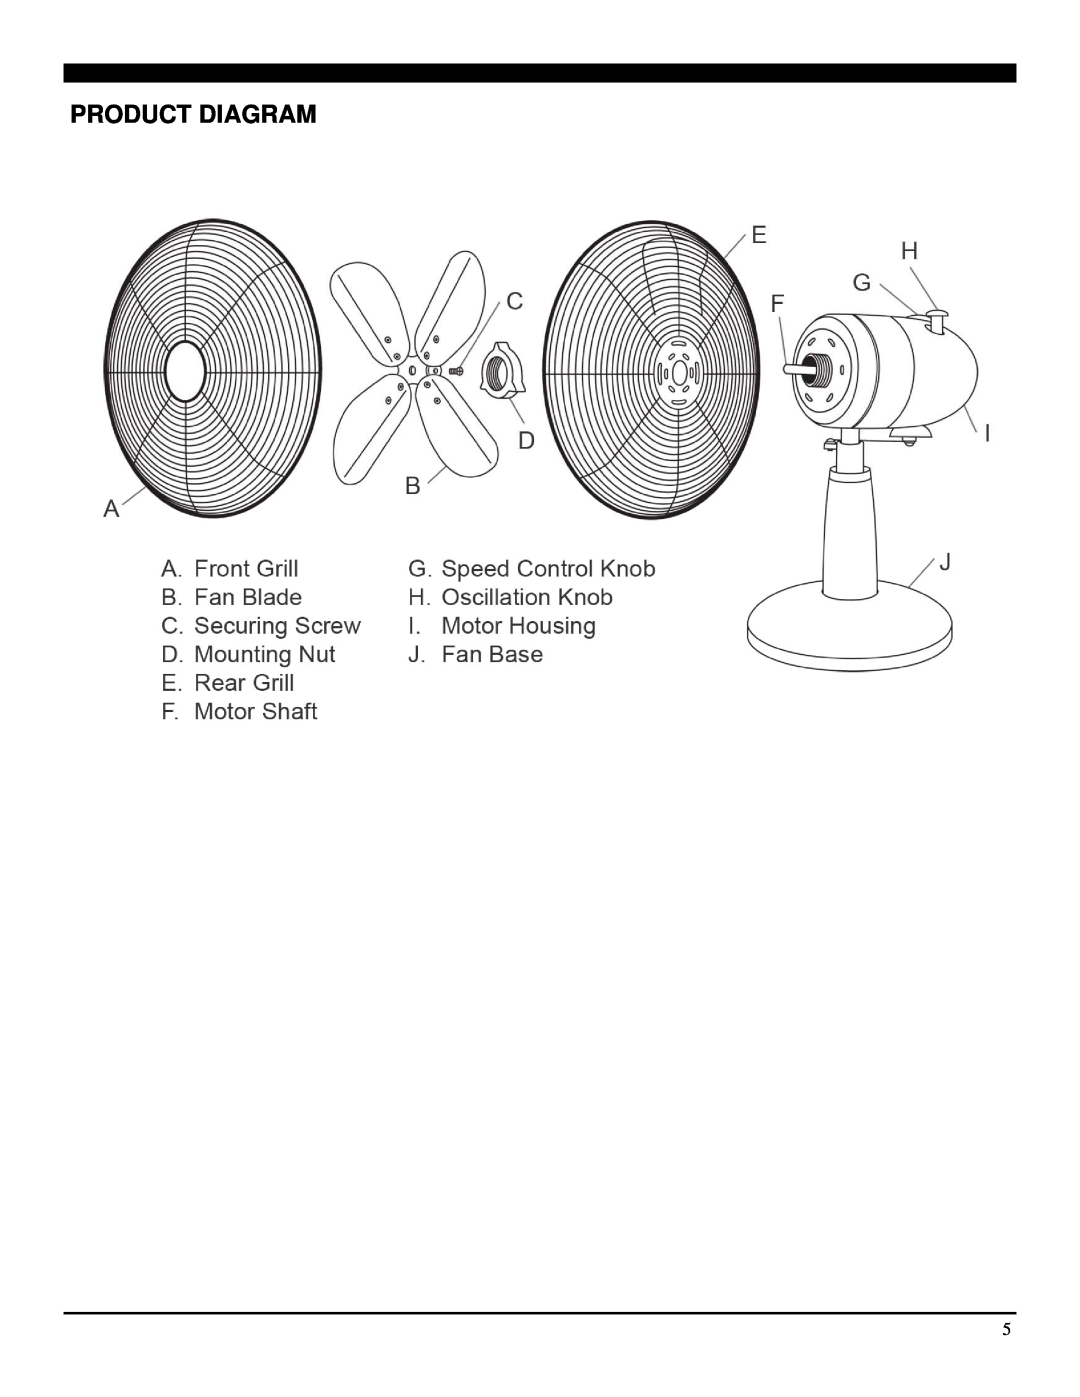 Soleus Air FT1-30-42 manual Product Diagram 